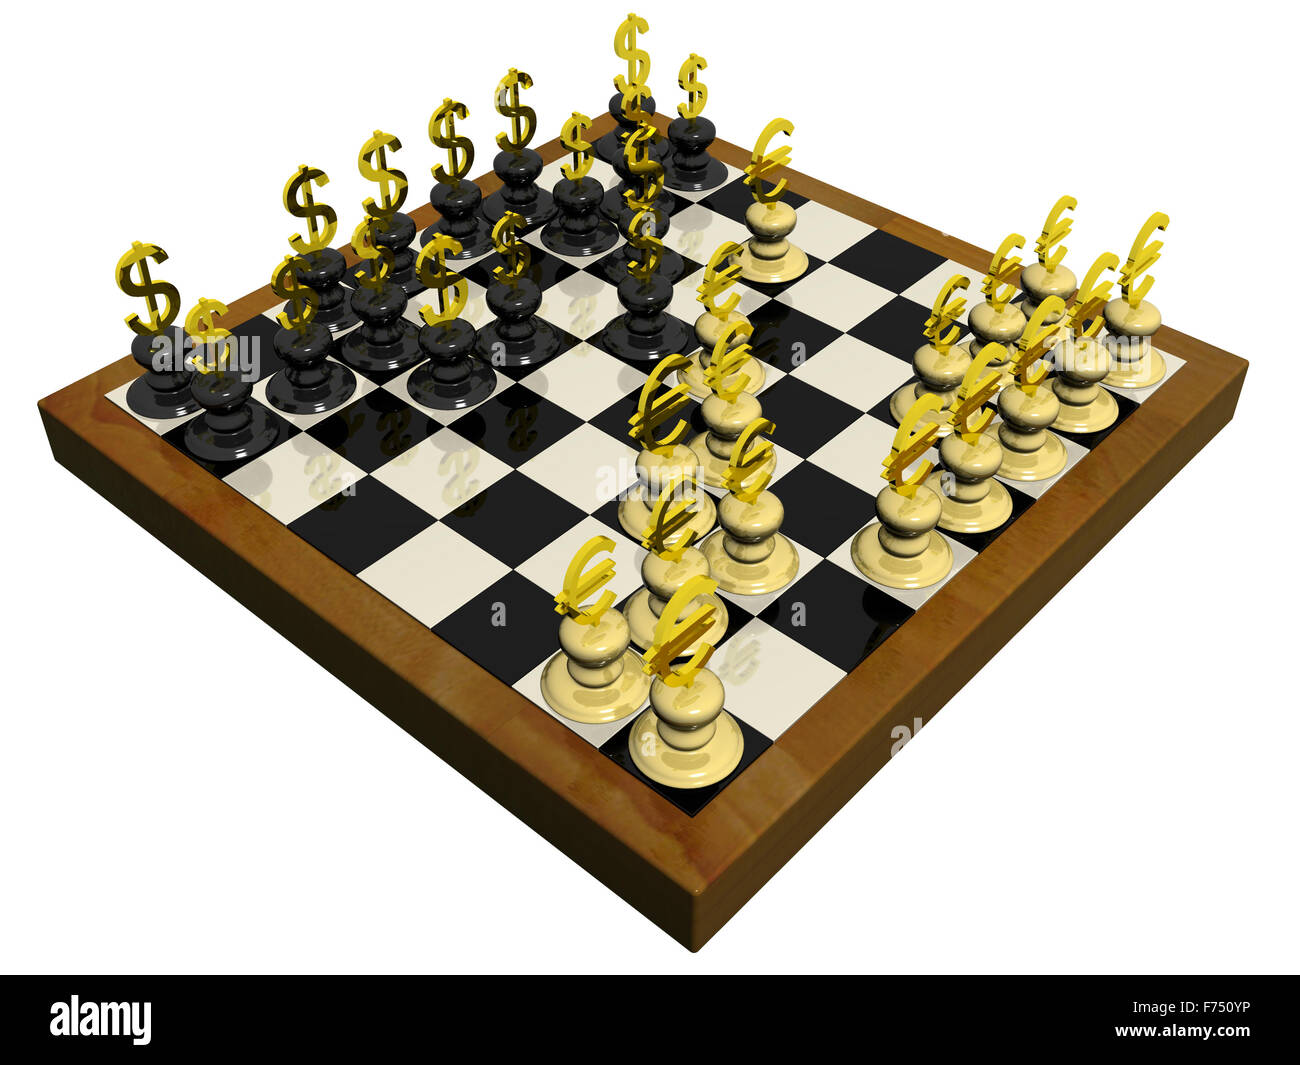 1.370 fotos de stock e banco de imagens de Chess Opening - Getty